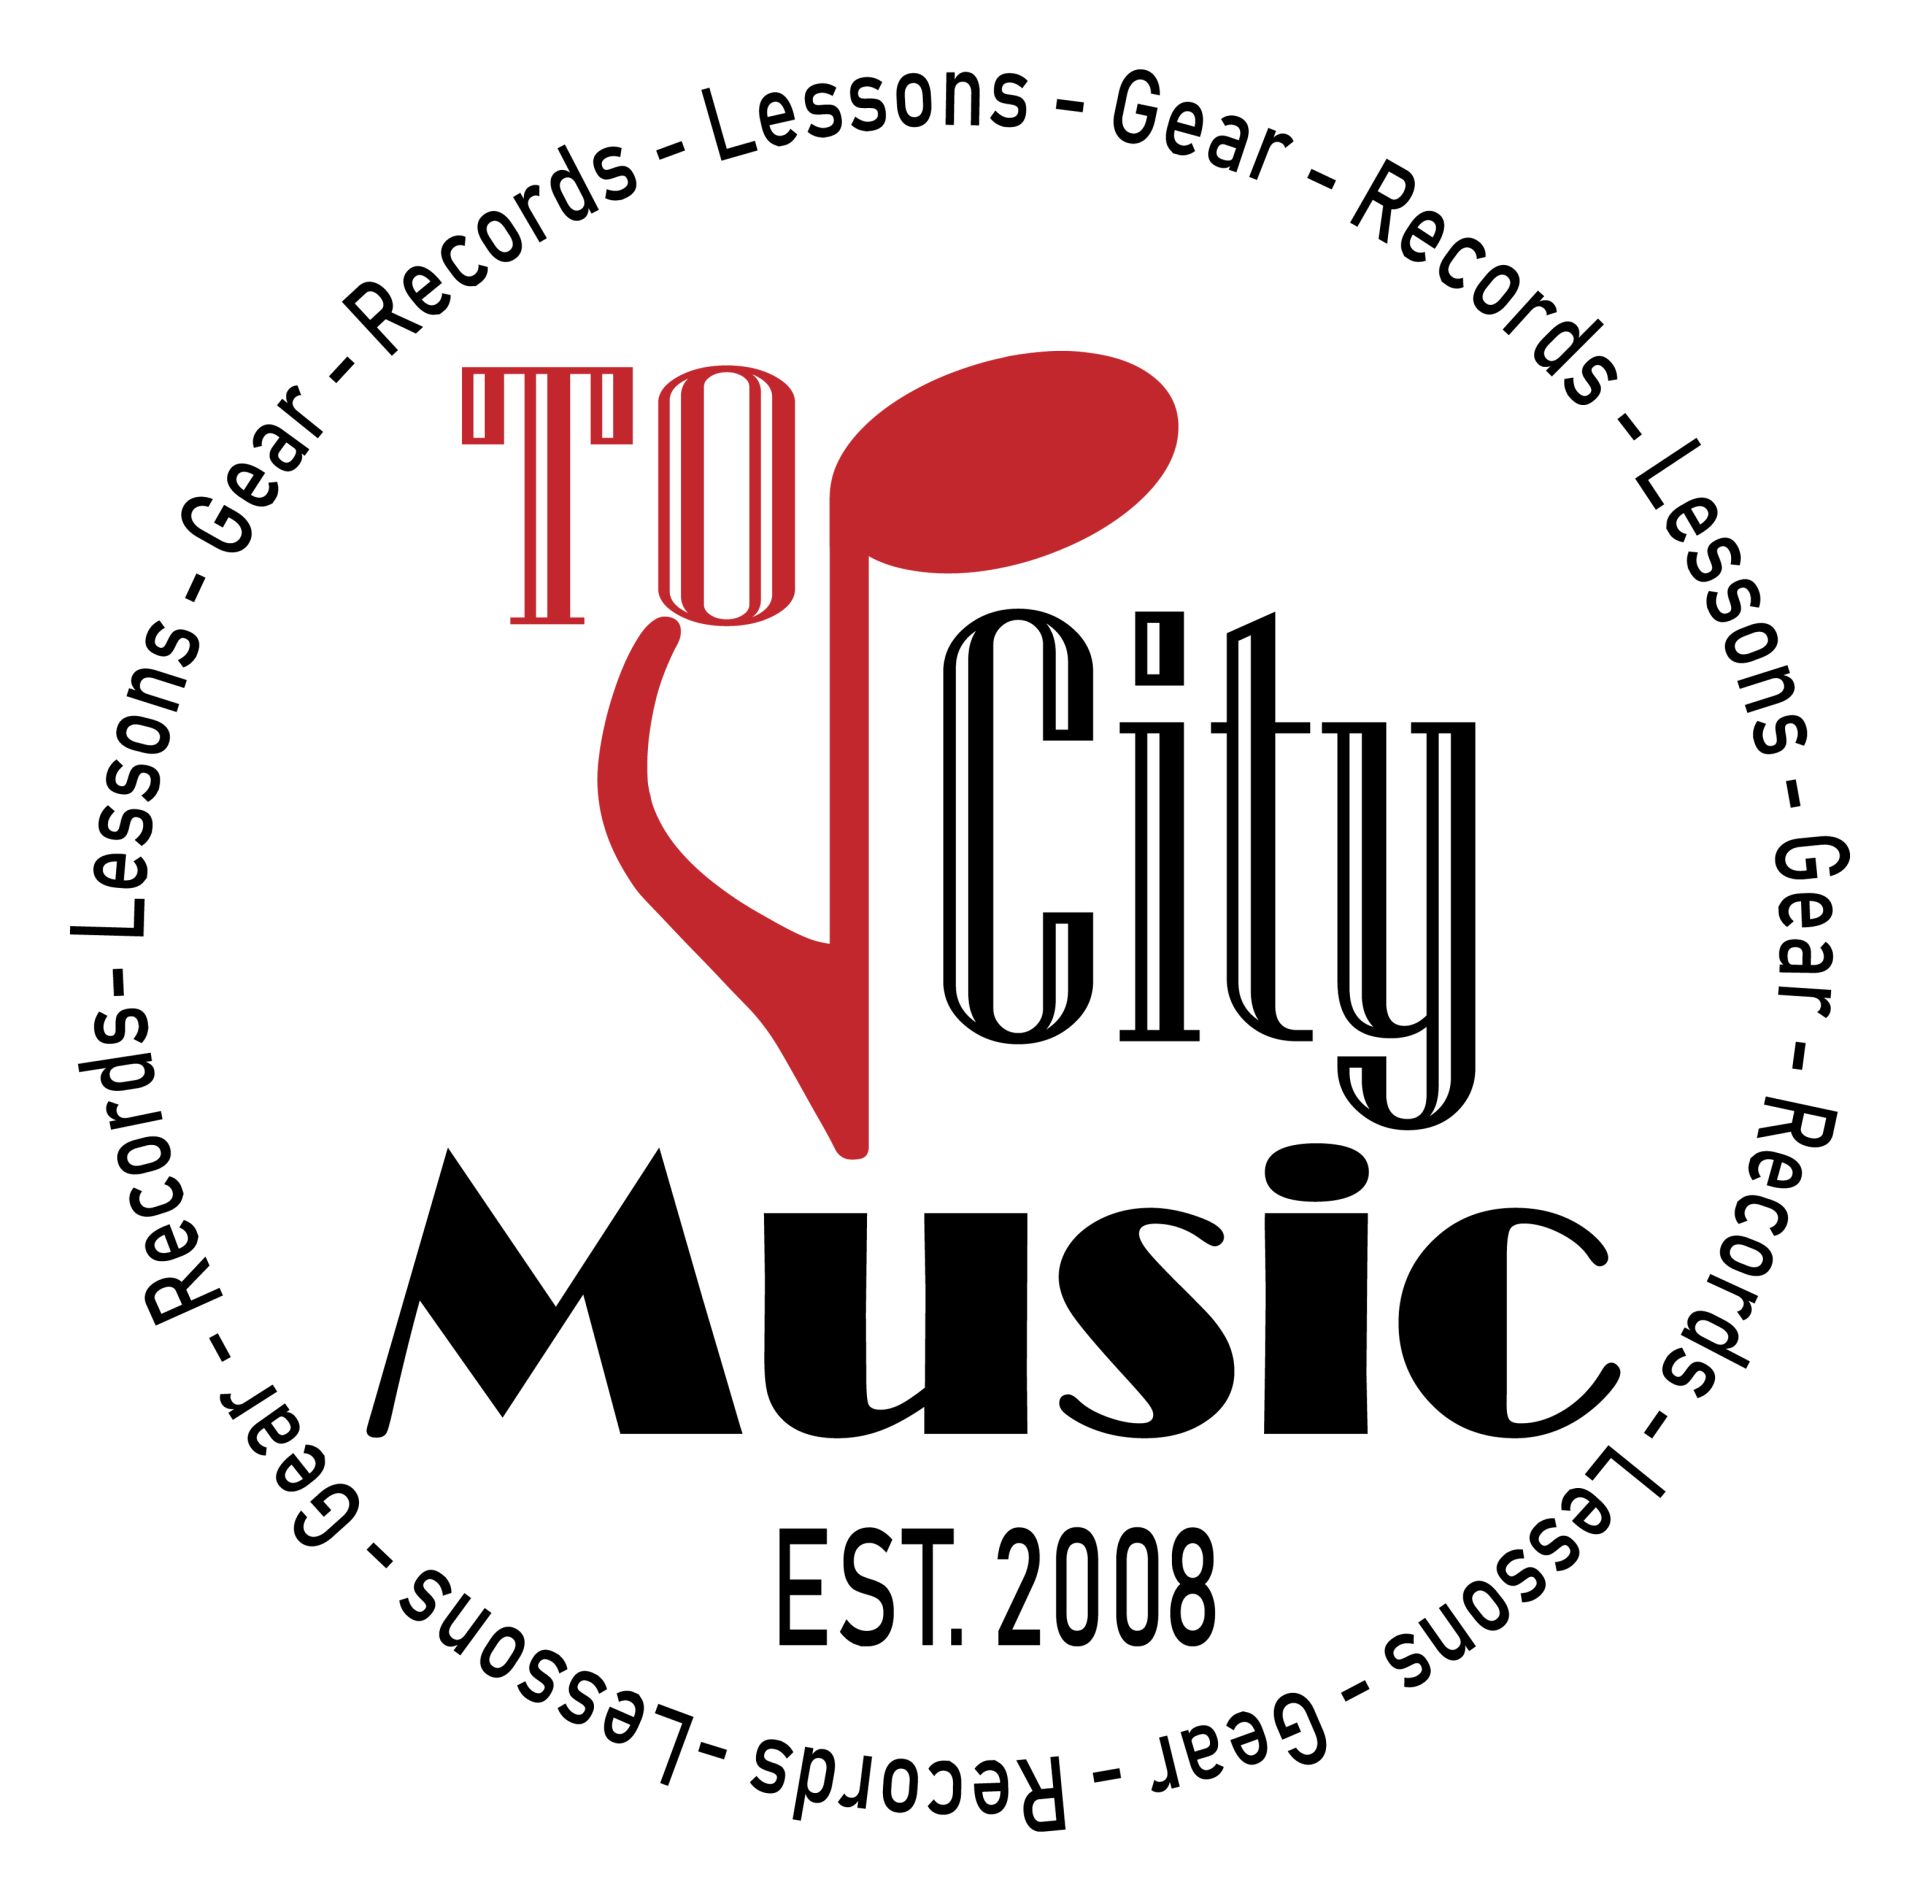 Top City Music, Topeka KS